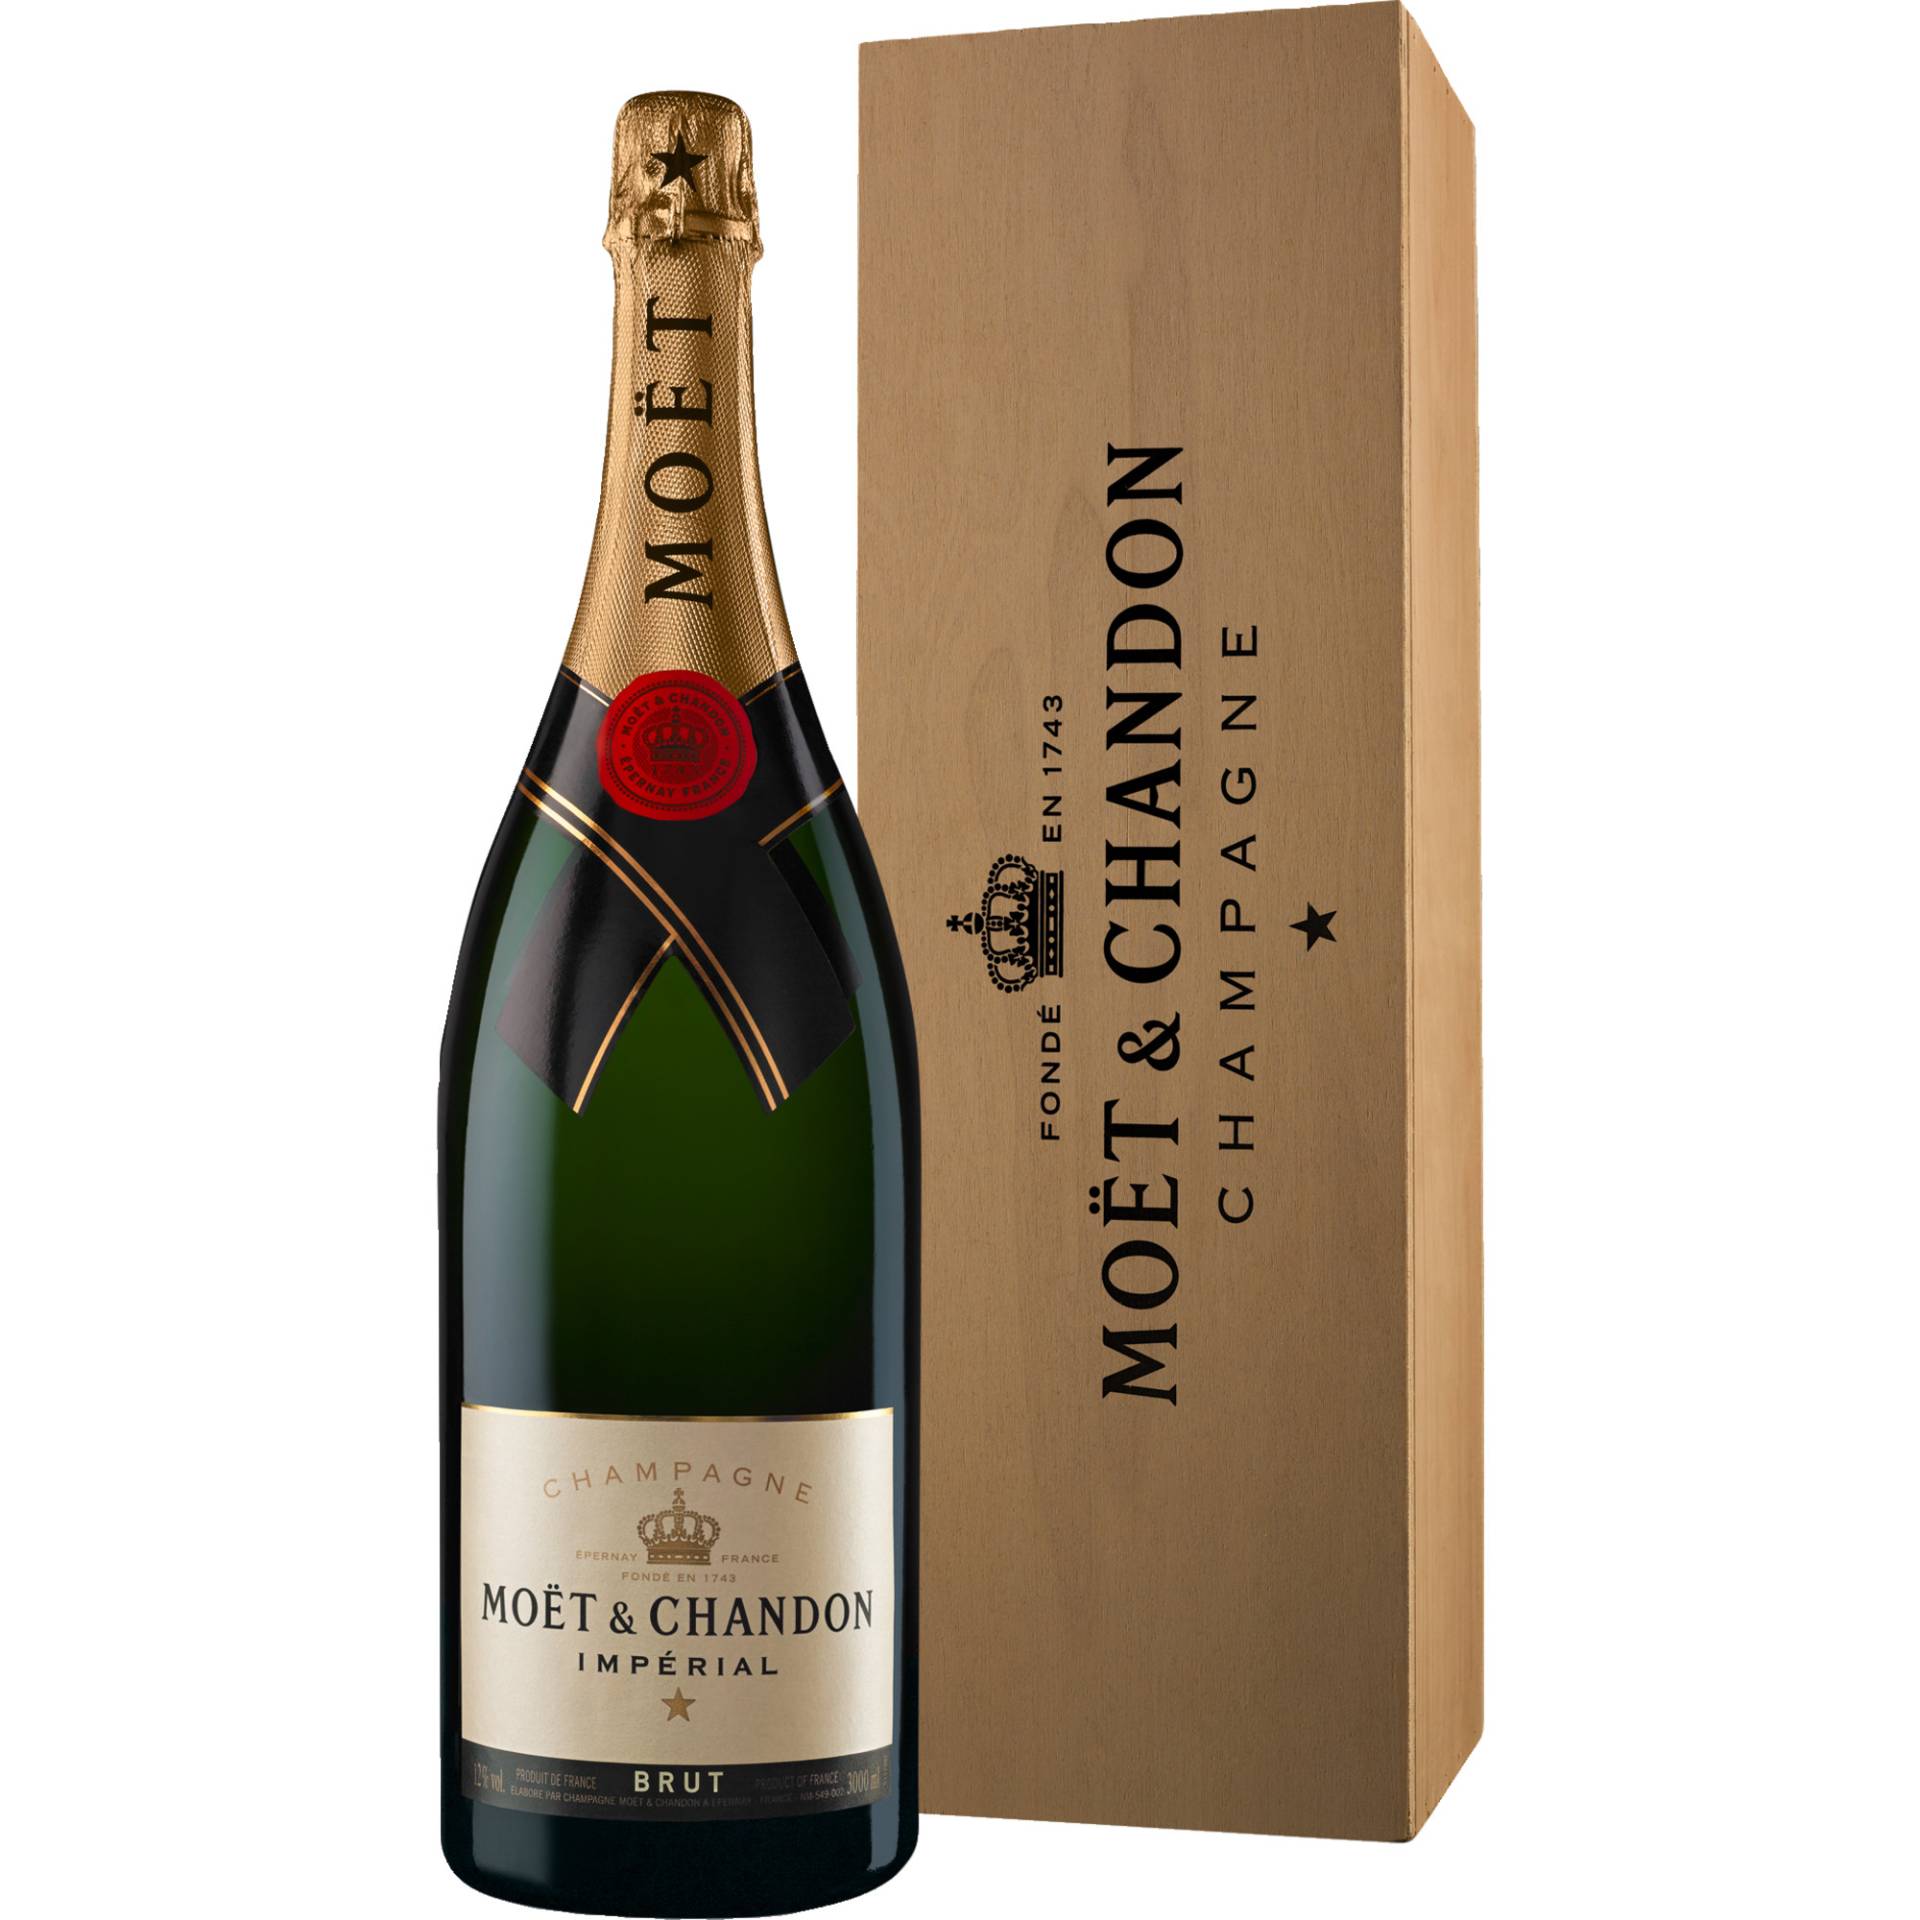 Champagne Moet & Chandon Imperial, Brut, Champagne AC, Geschenketui, Jeroboam, Champagne, Schaumwein von Champagne Moet & Chandon, Epernay, France NM549-007